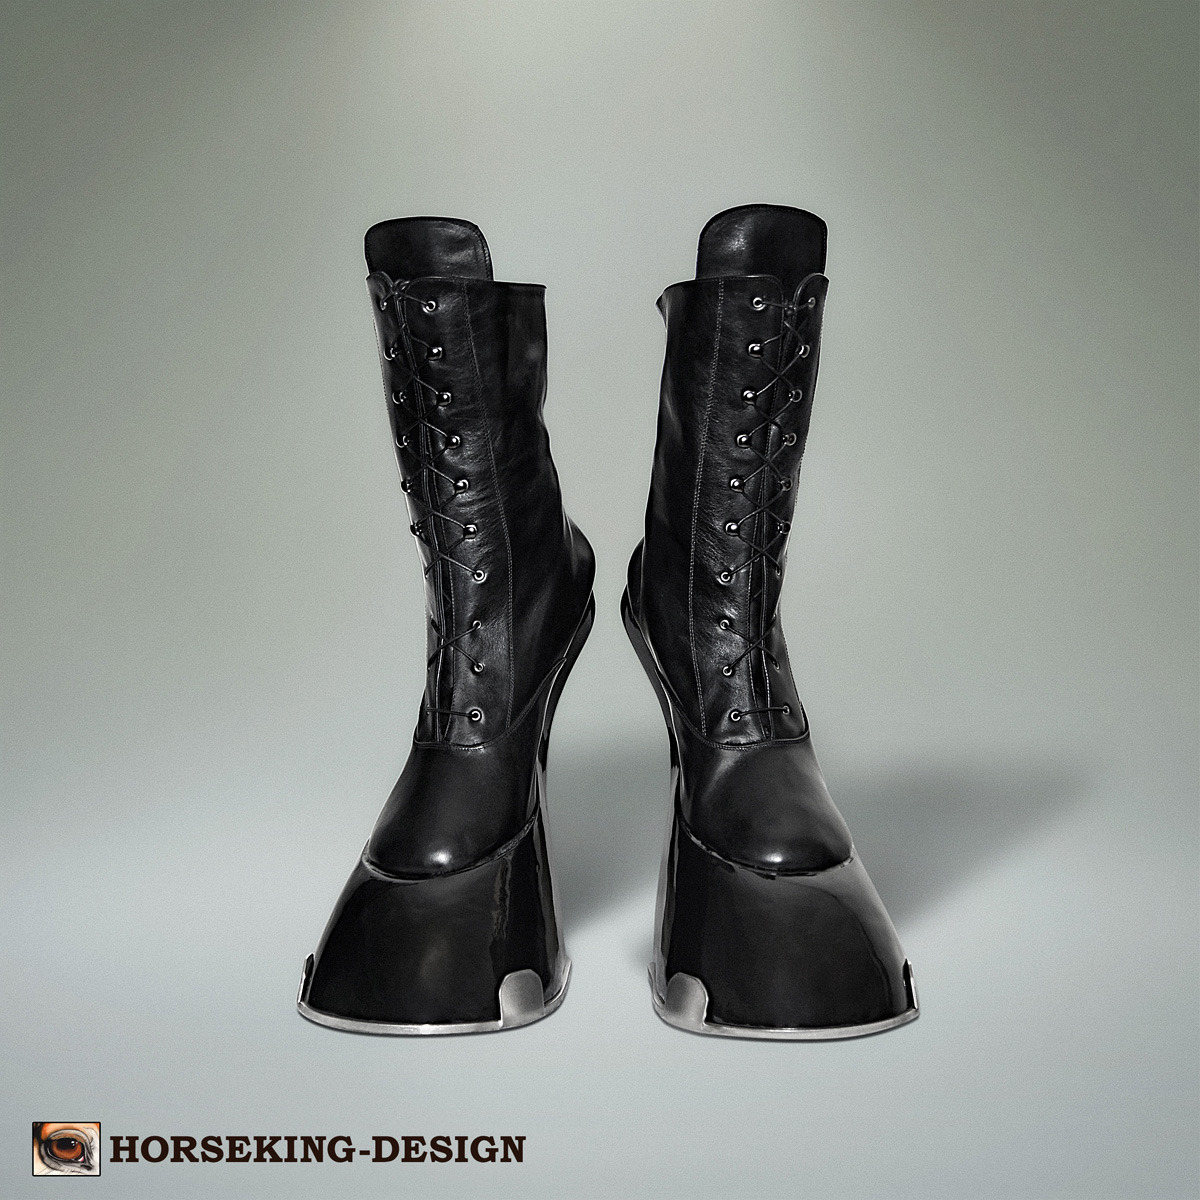 HORSEKING DESIGN — Draft horse boots with shiny surface